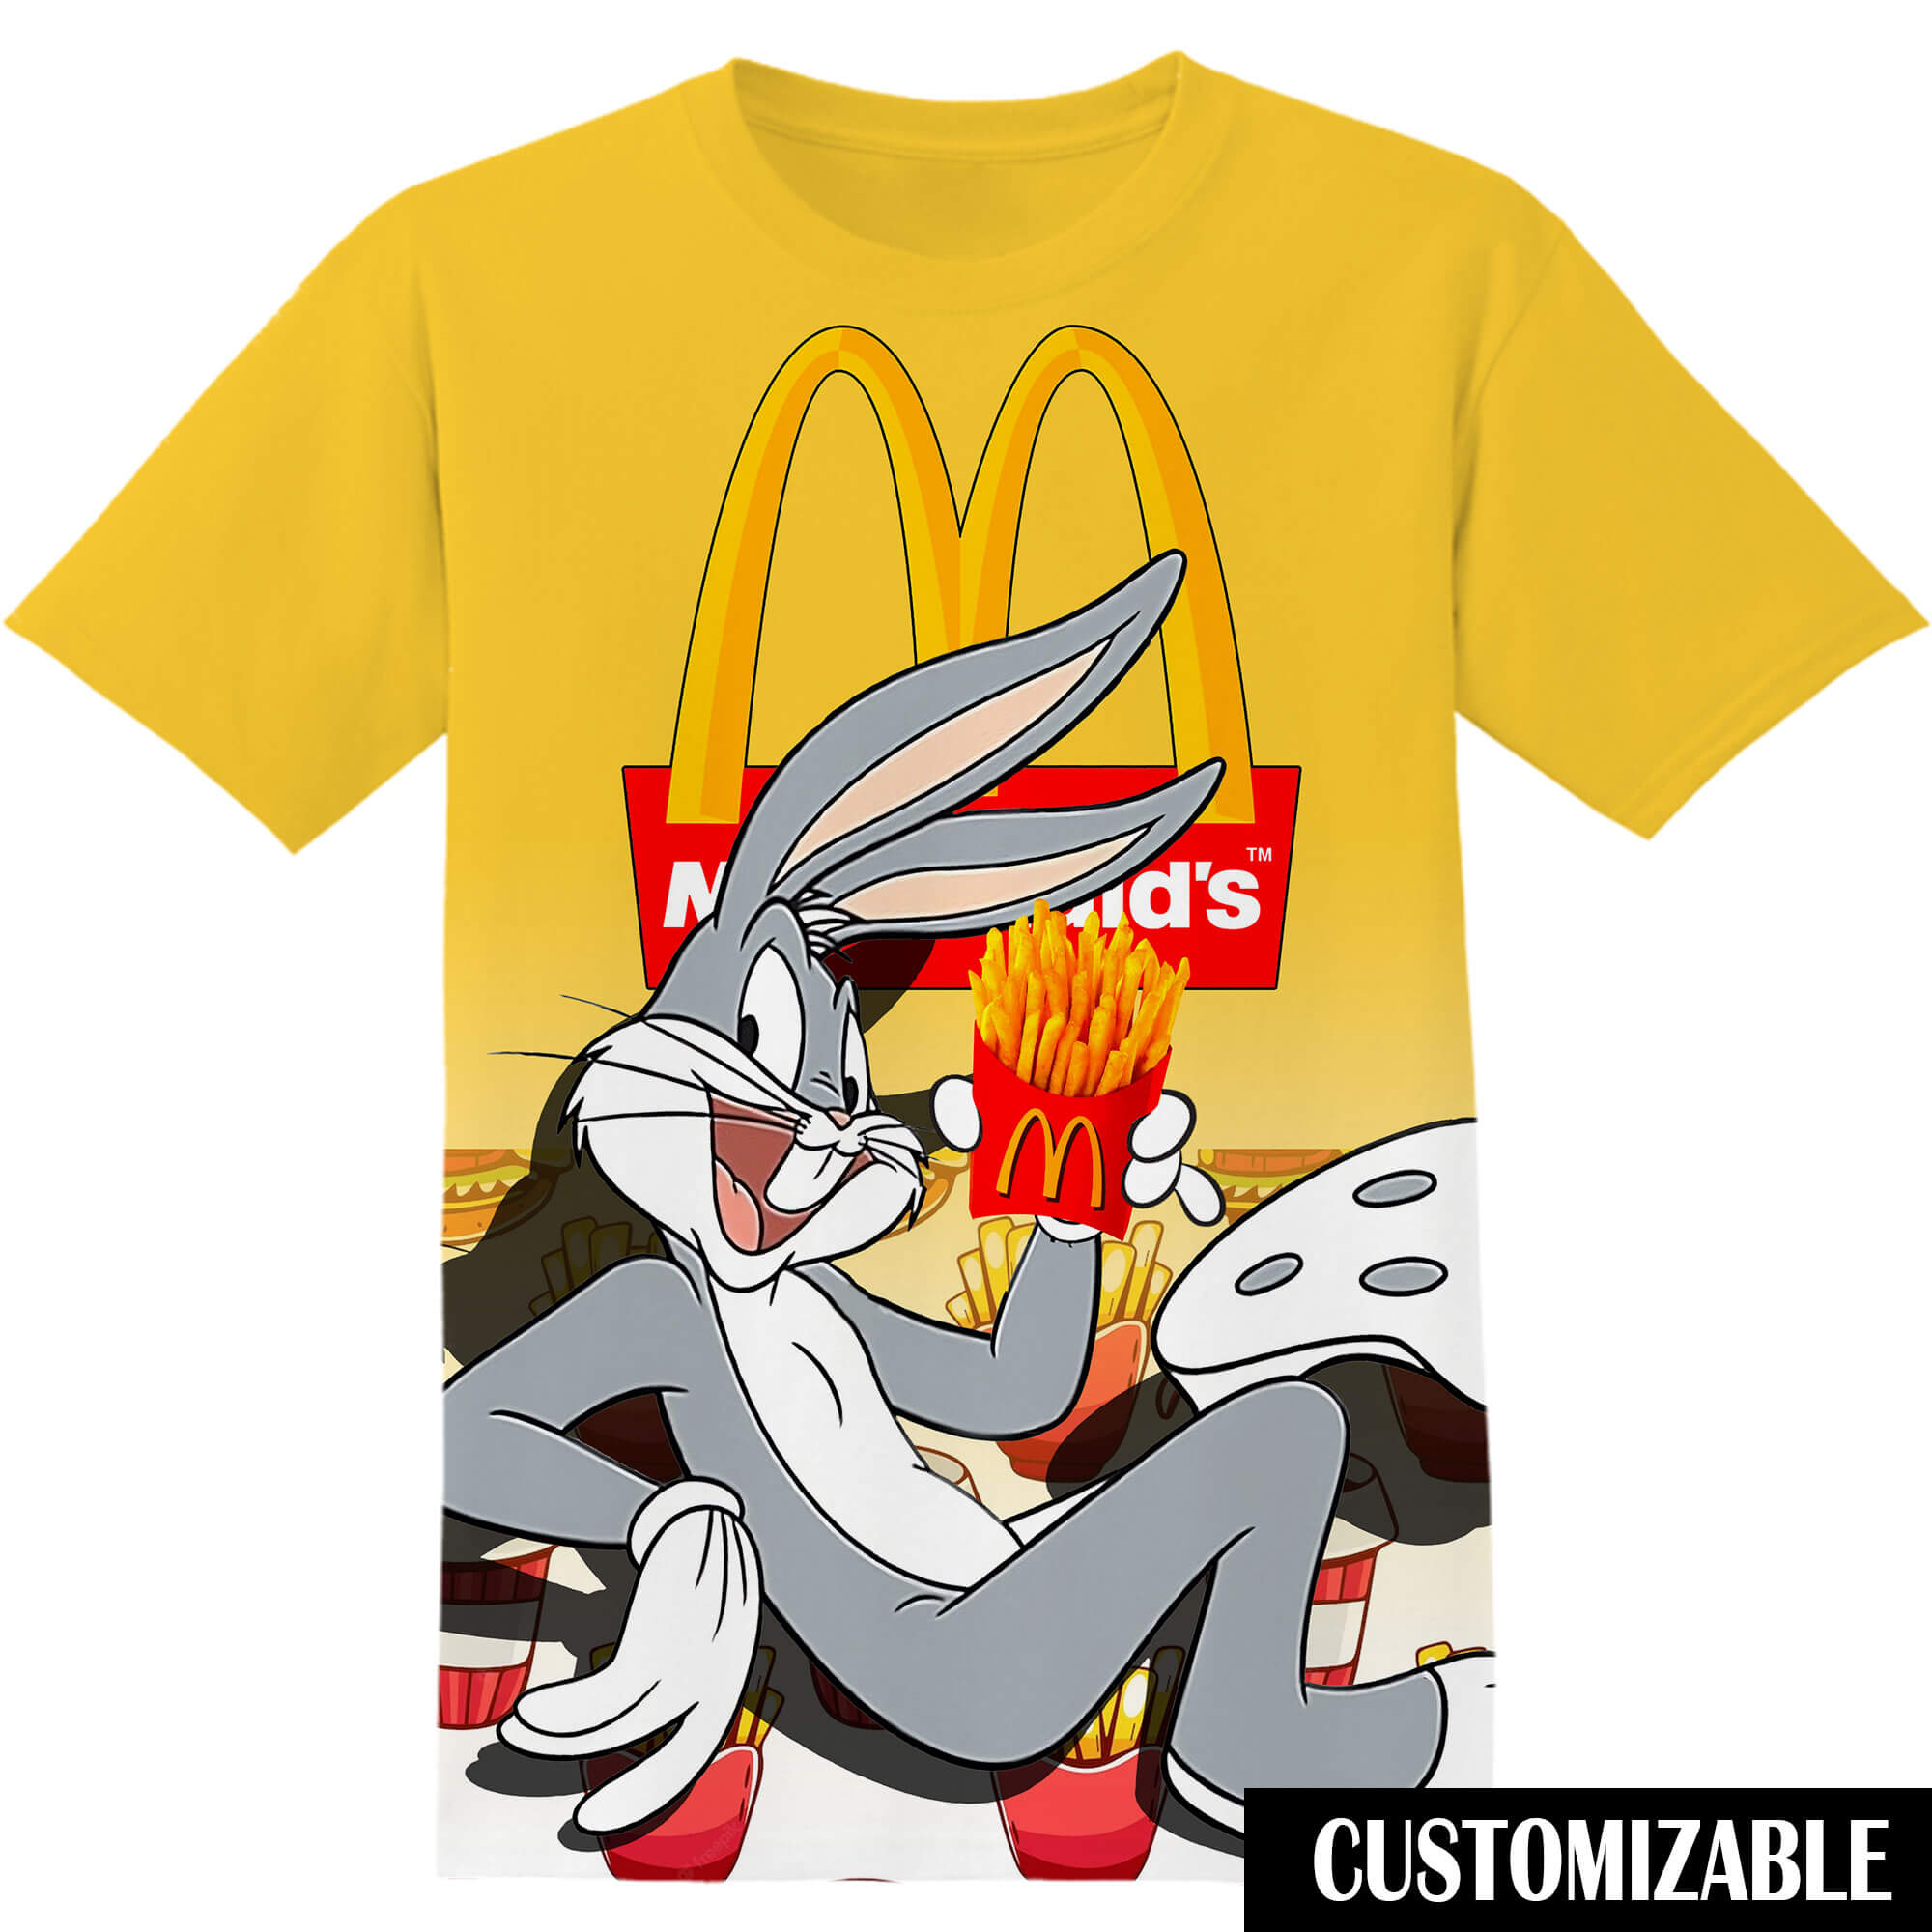 Customized McDonalds Bugs Bunny Shirt